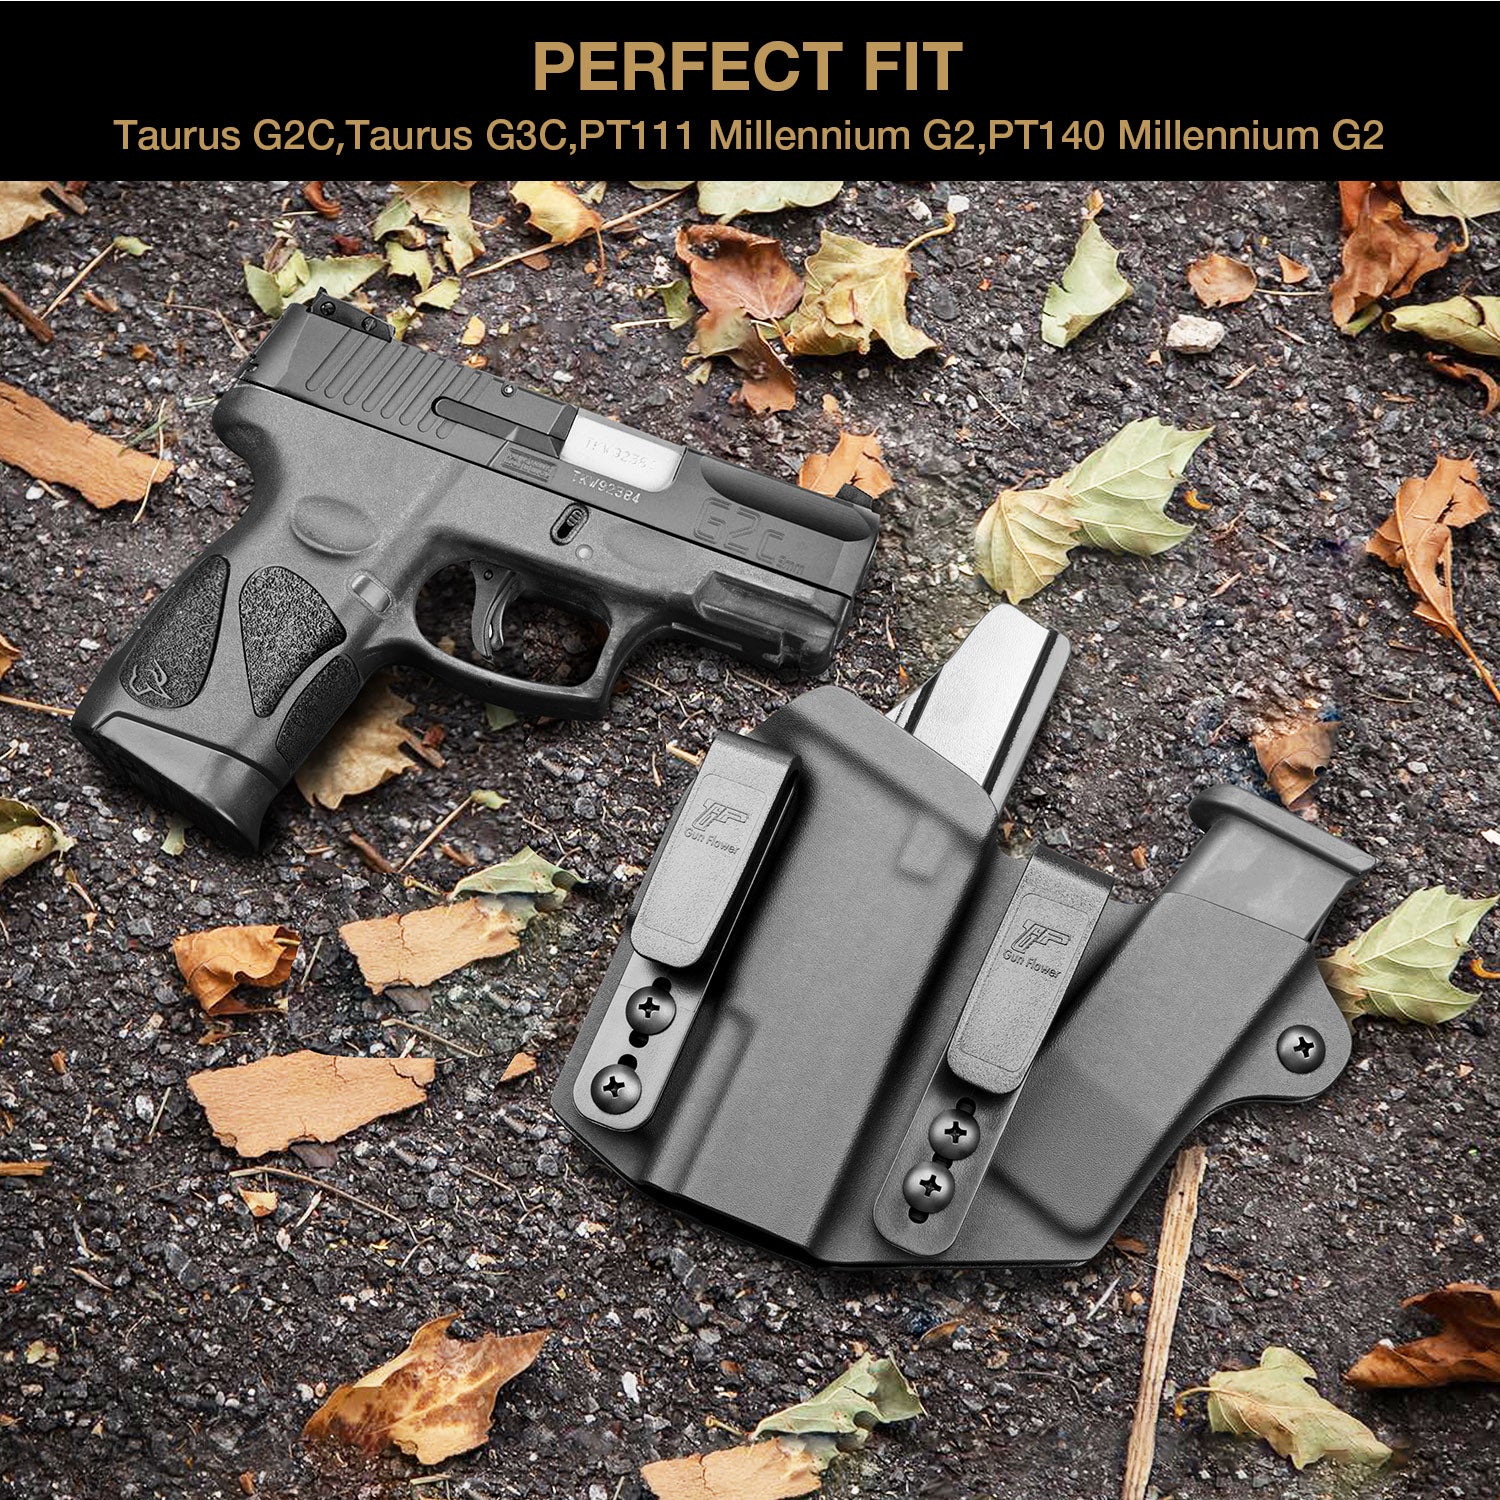 Magazine-Sleeve for Taurus-G2C / G3C / PT111 G2 9mm - Read Description!!